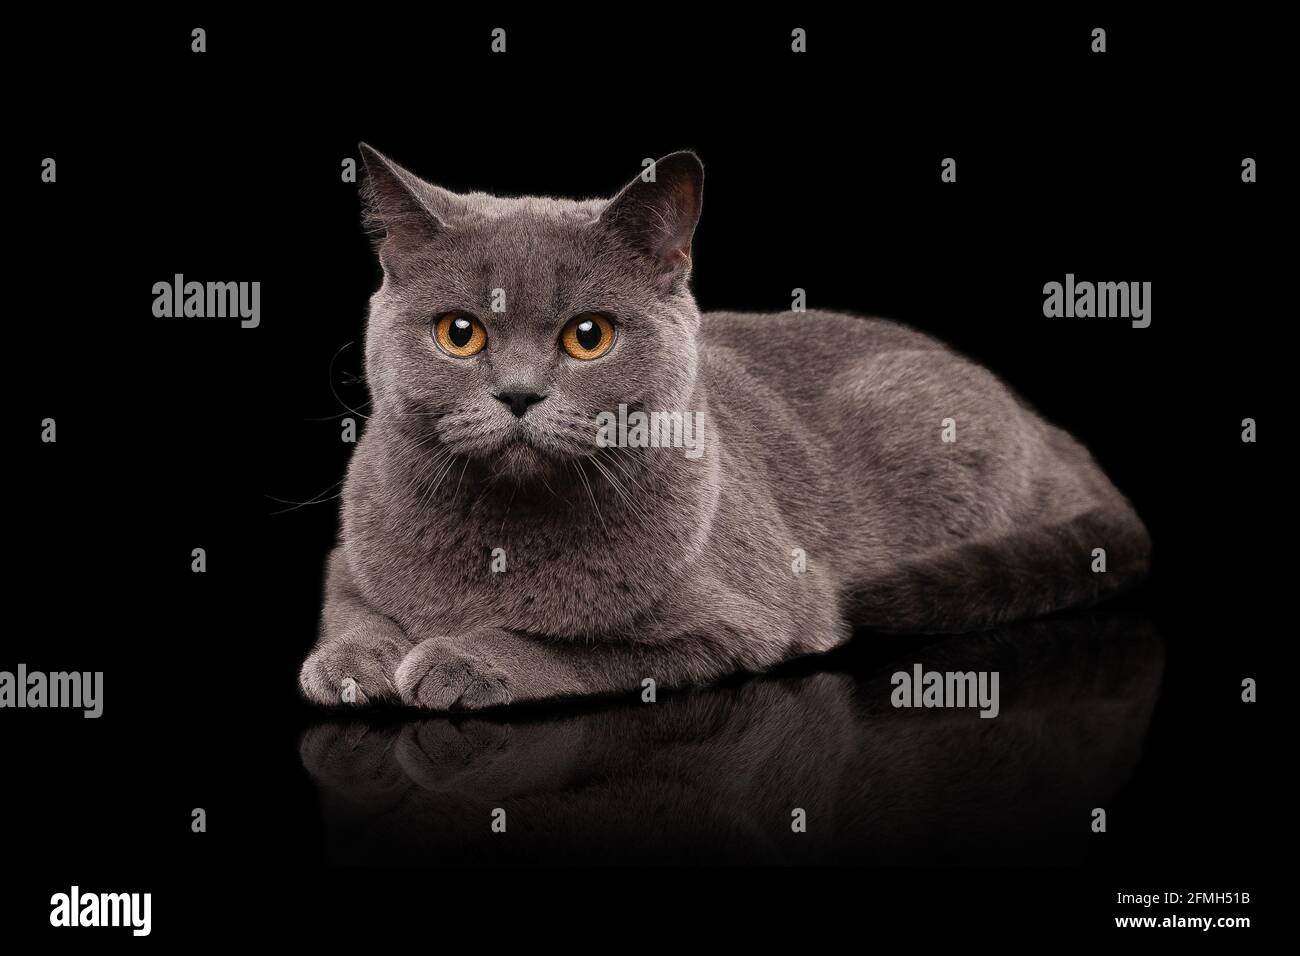 Adorable dark gray Scottish Straight cat Stock Photo